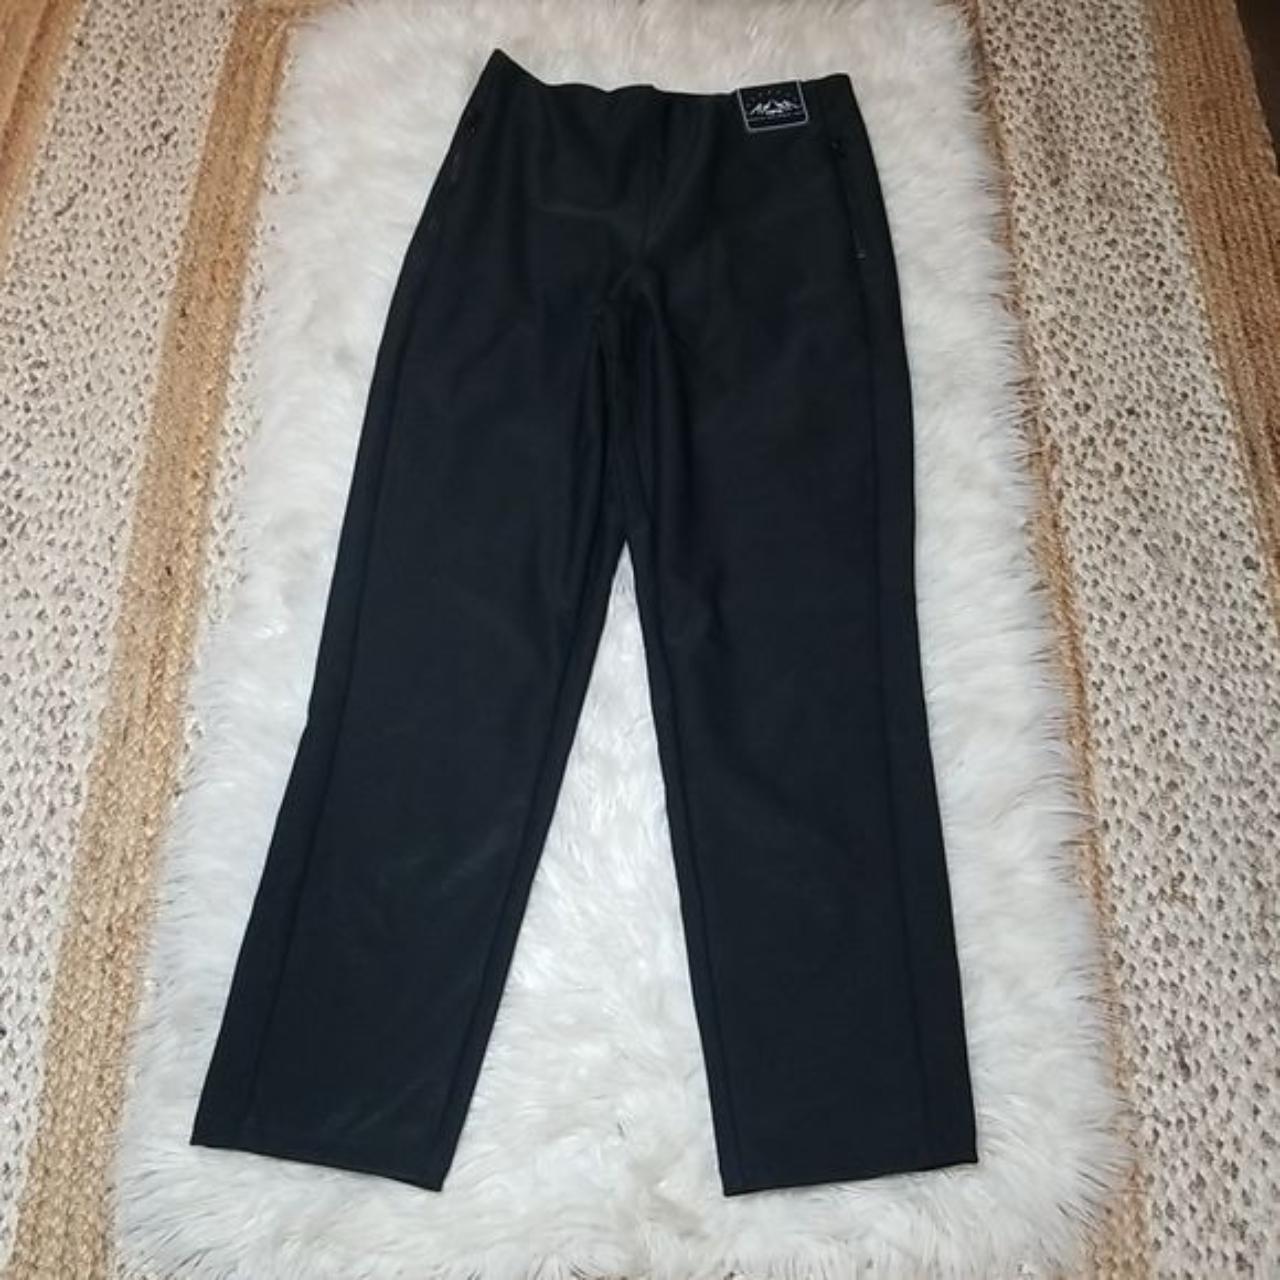 Product Image 2 - HFX Black Winter Tech Pants